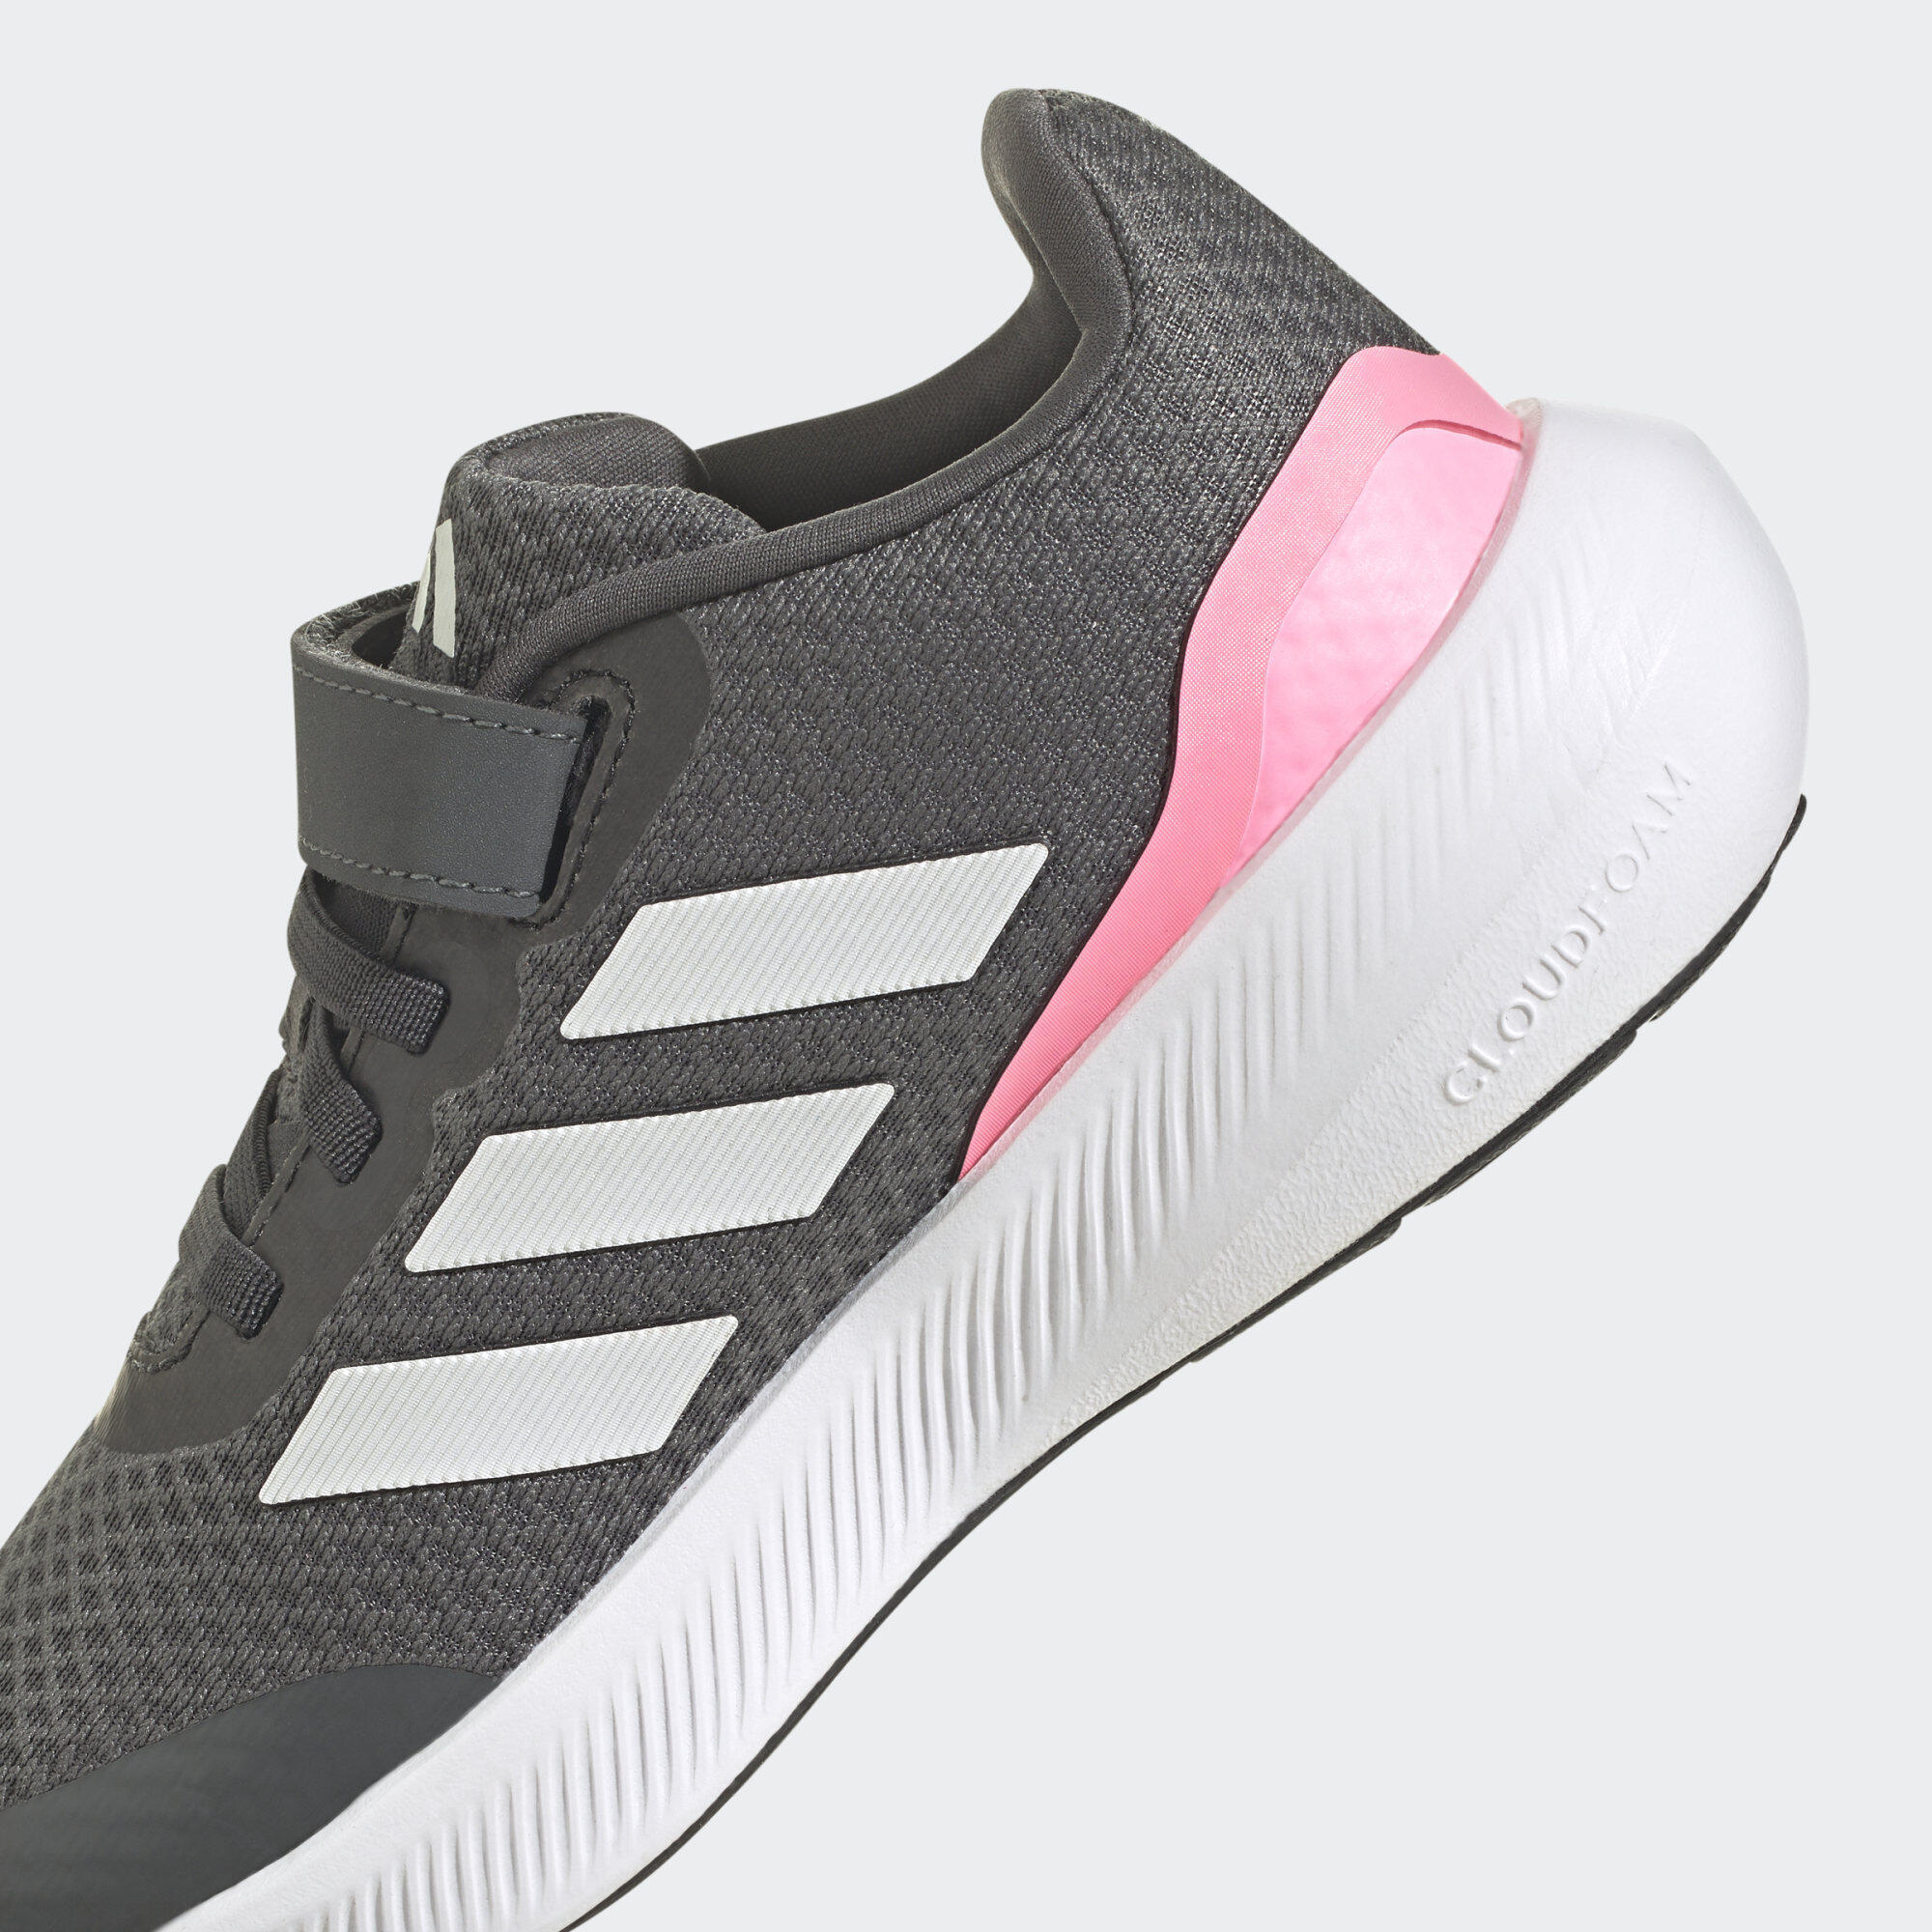 Top Elastic - Decathlon Lace 3.0 ADIDAS RunFalcon Shoes Strap